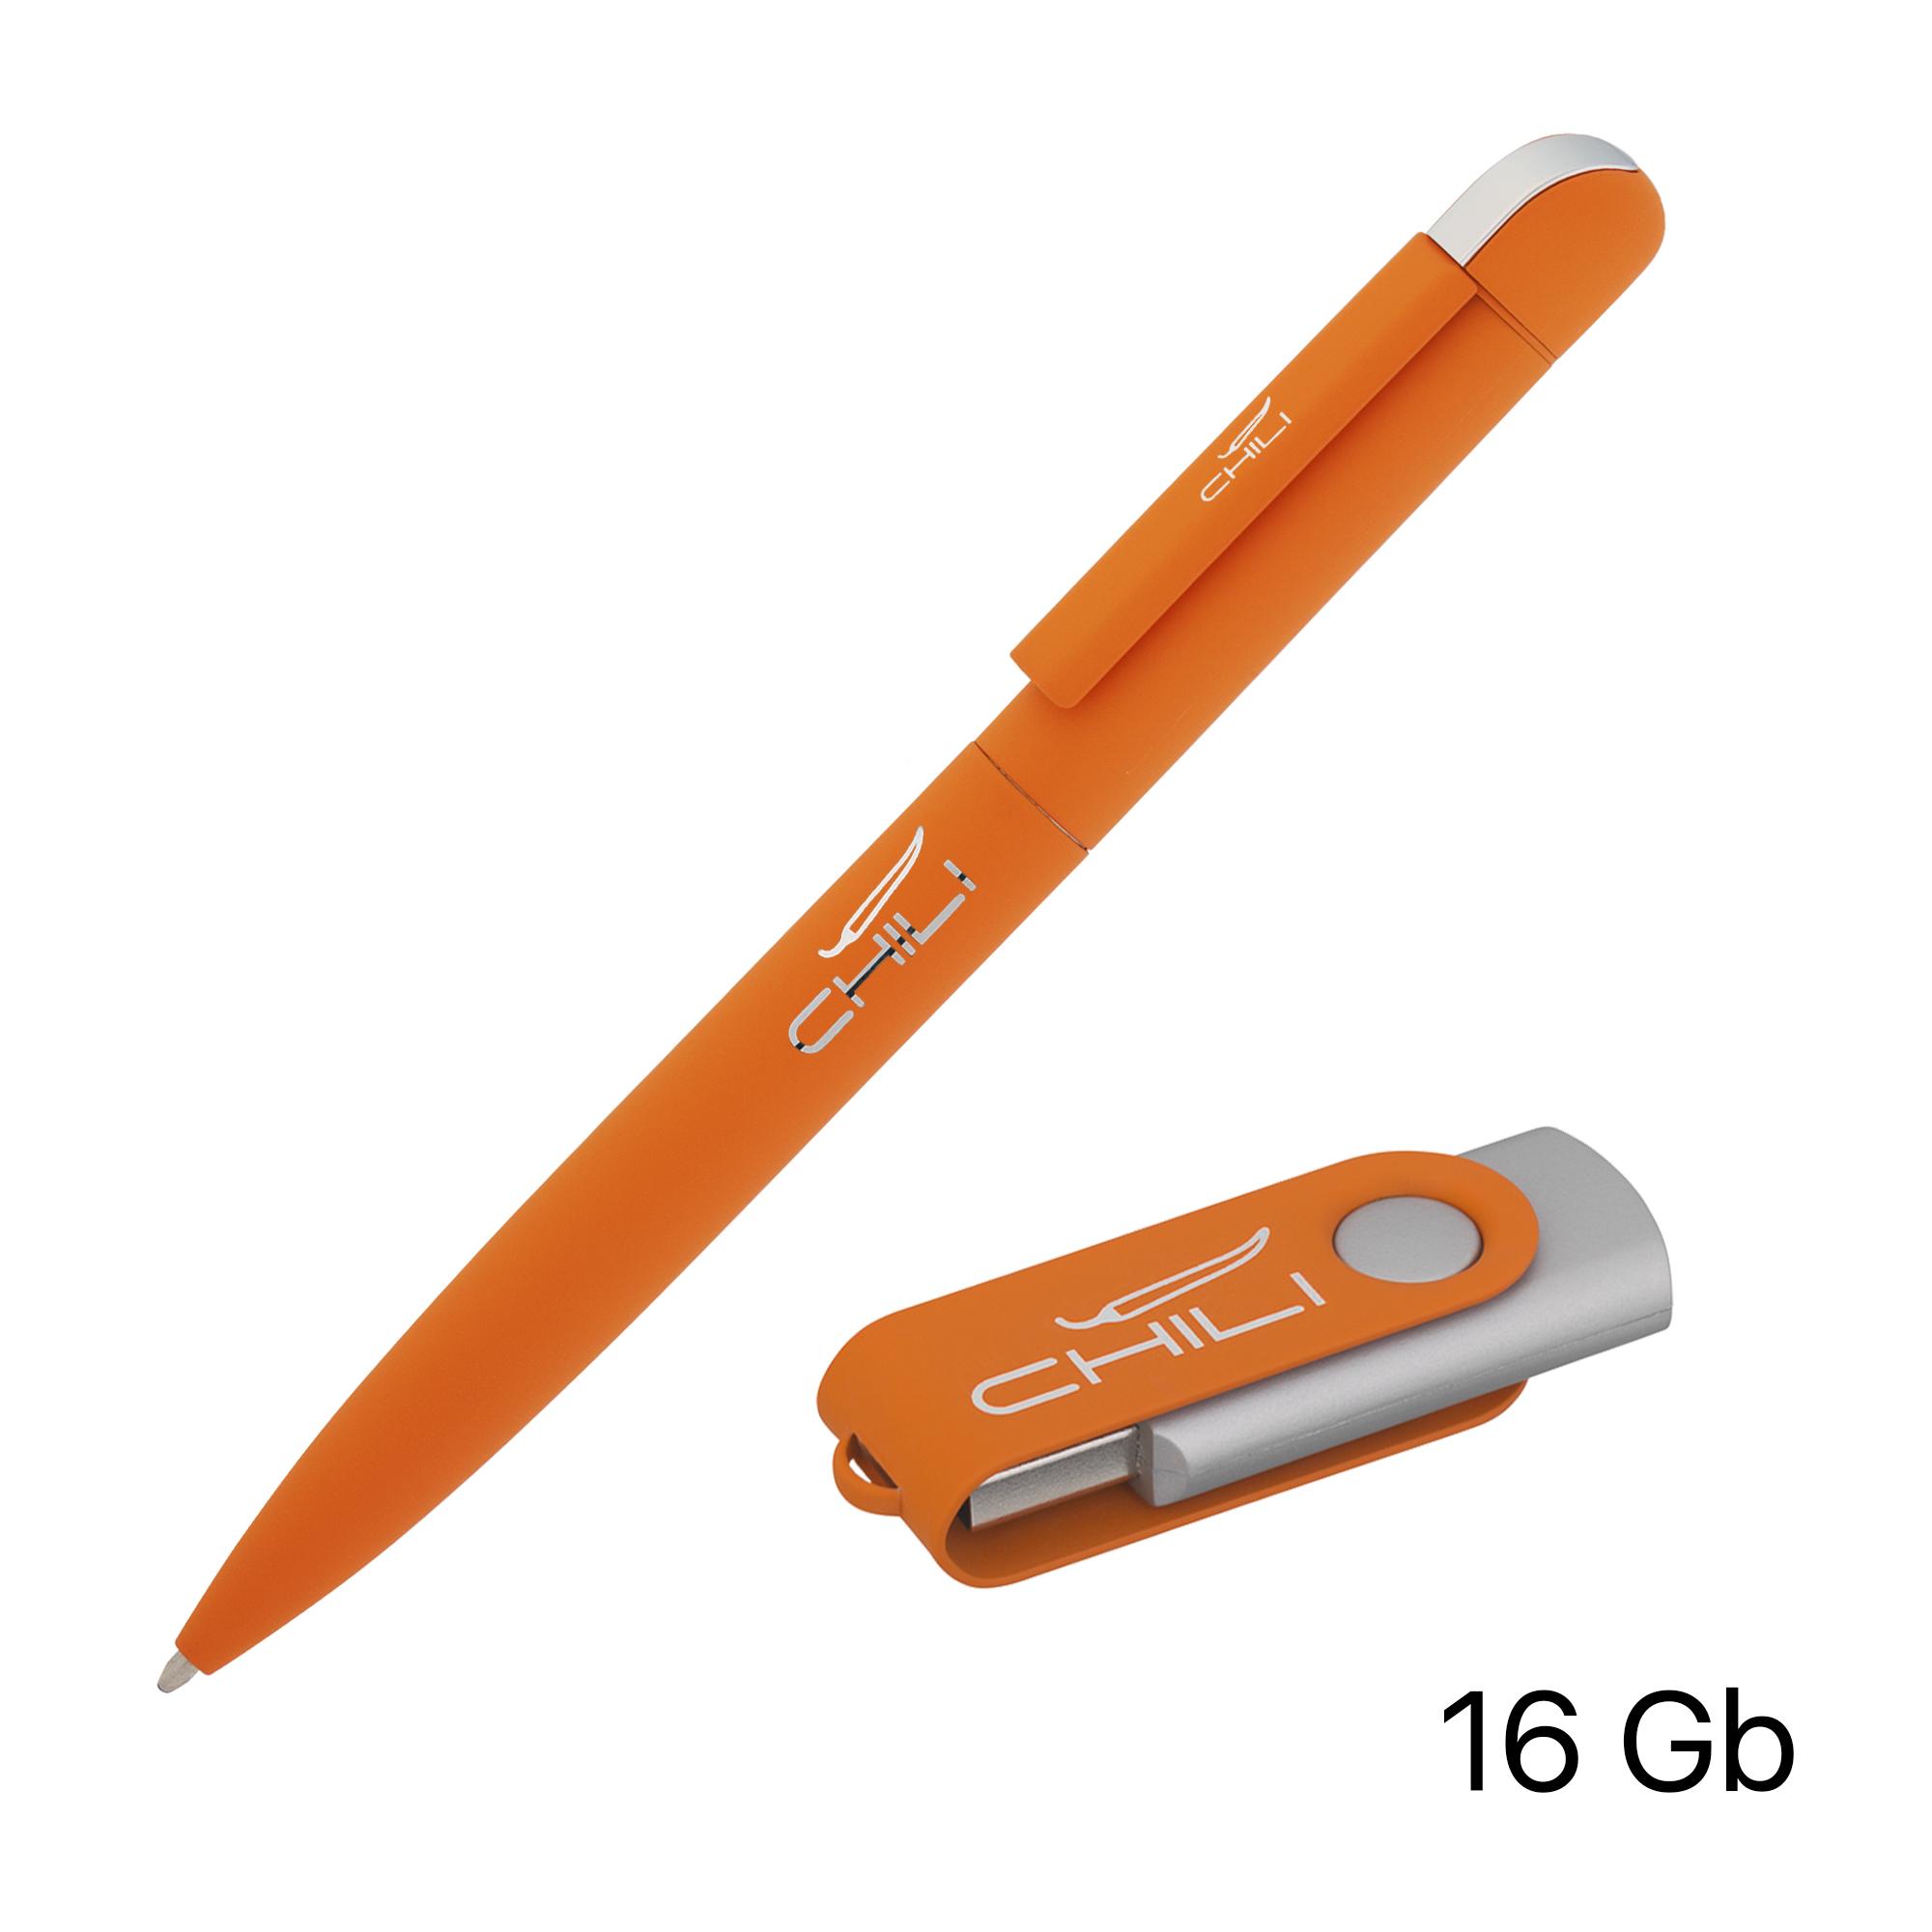 Набор ручка + флеш-карта 16 Гб в футляре, покрытие soft touch, цвет оранжевый, фото 1